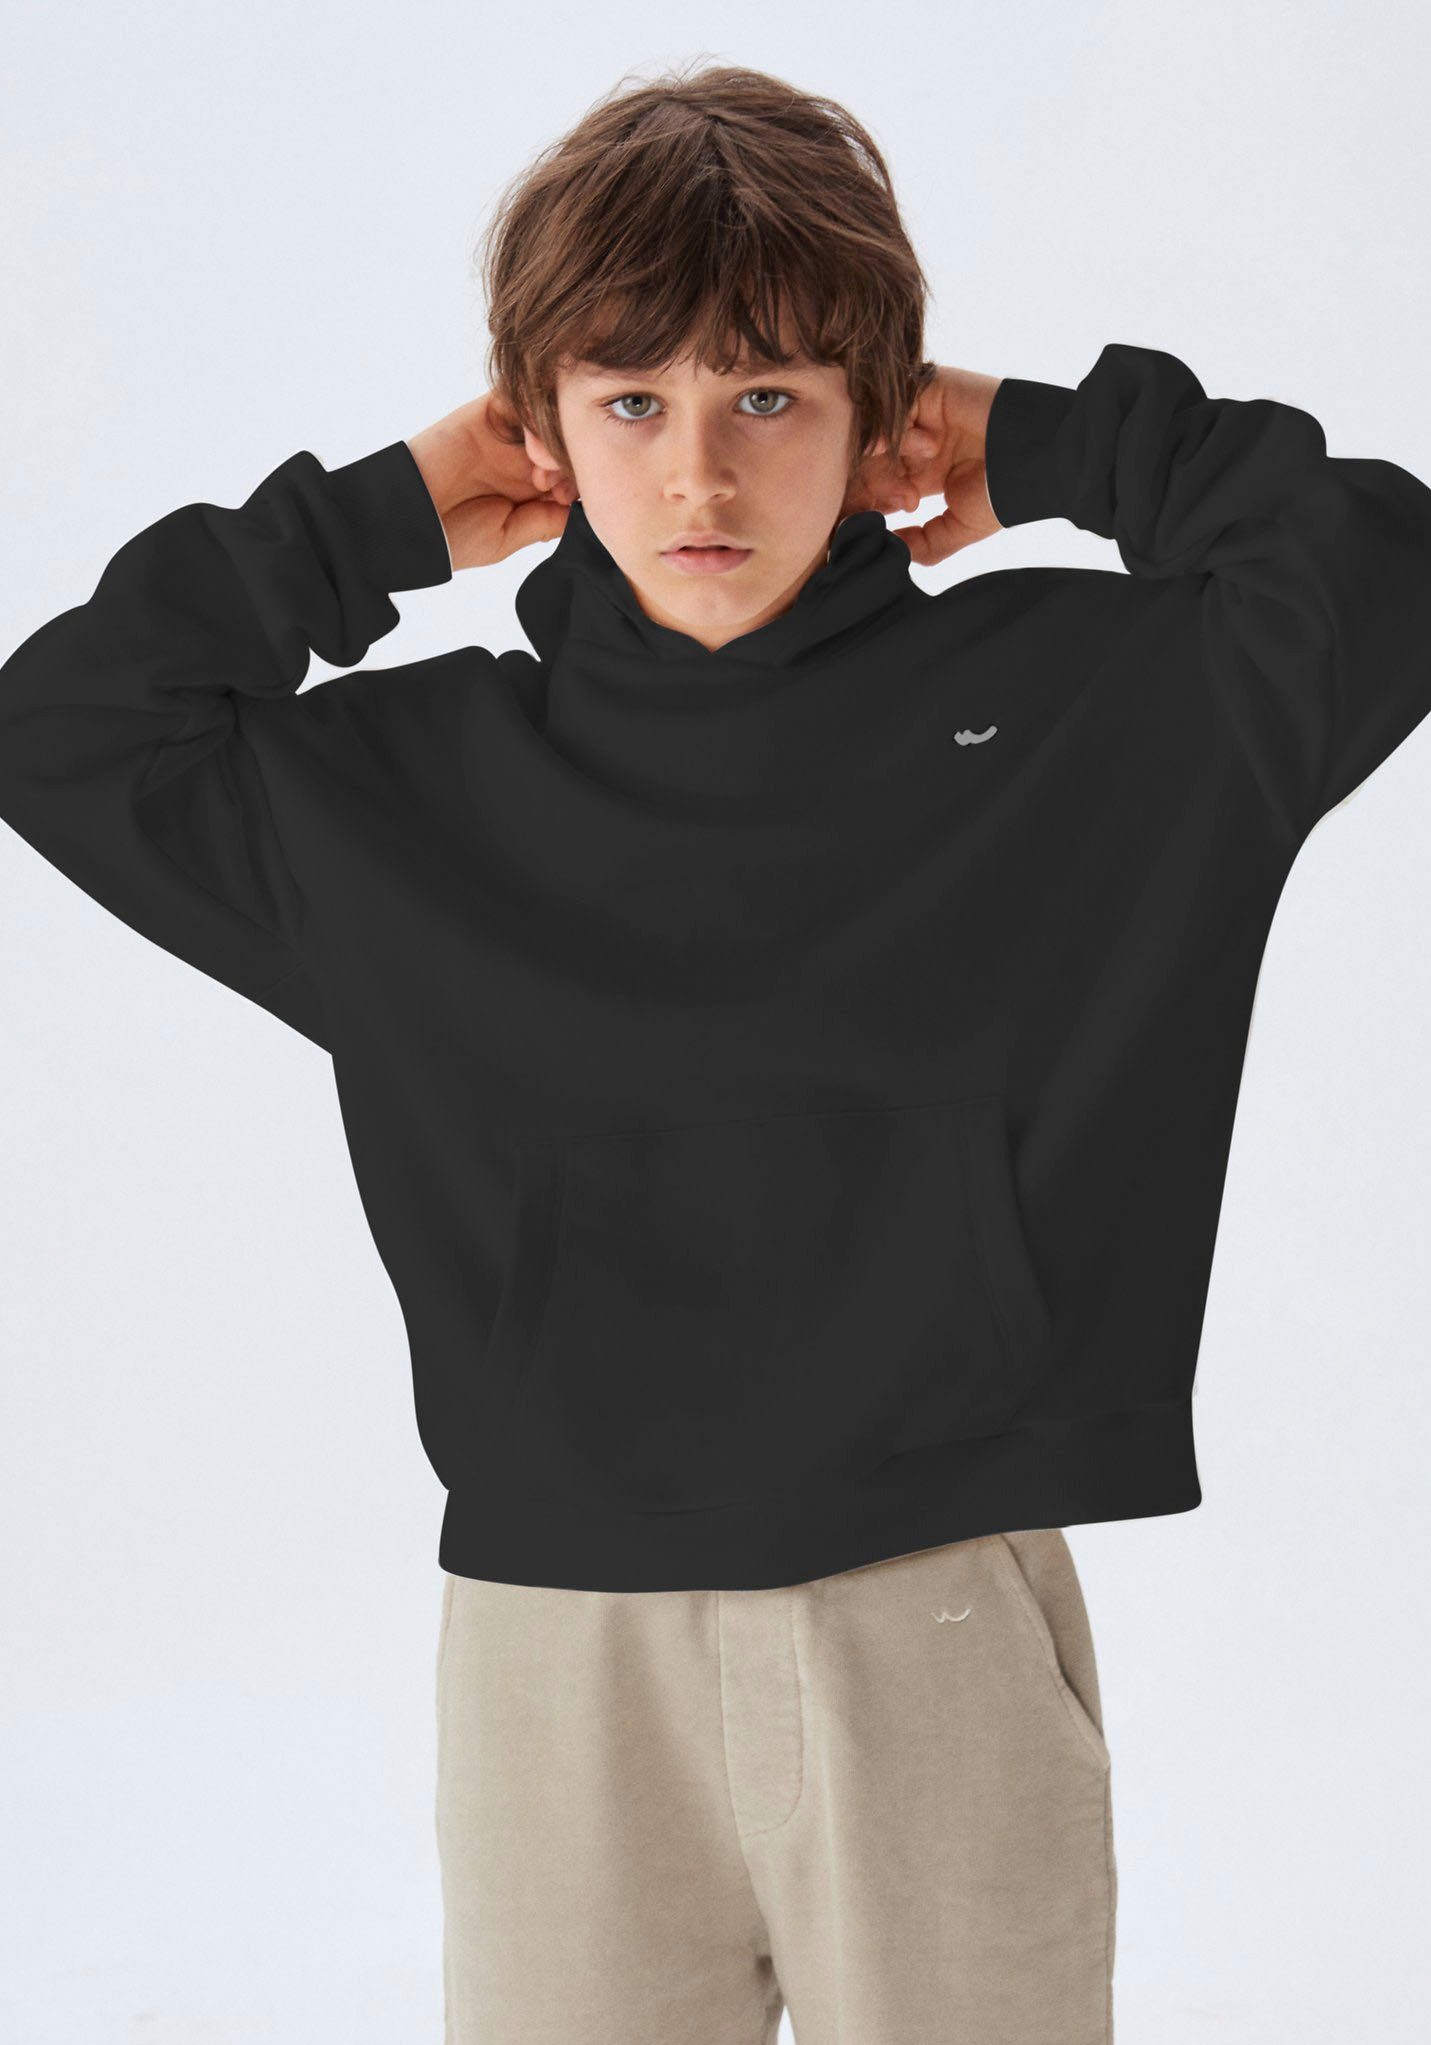 Sweatshirt LTB TOHOCO black